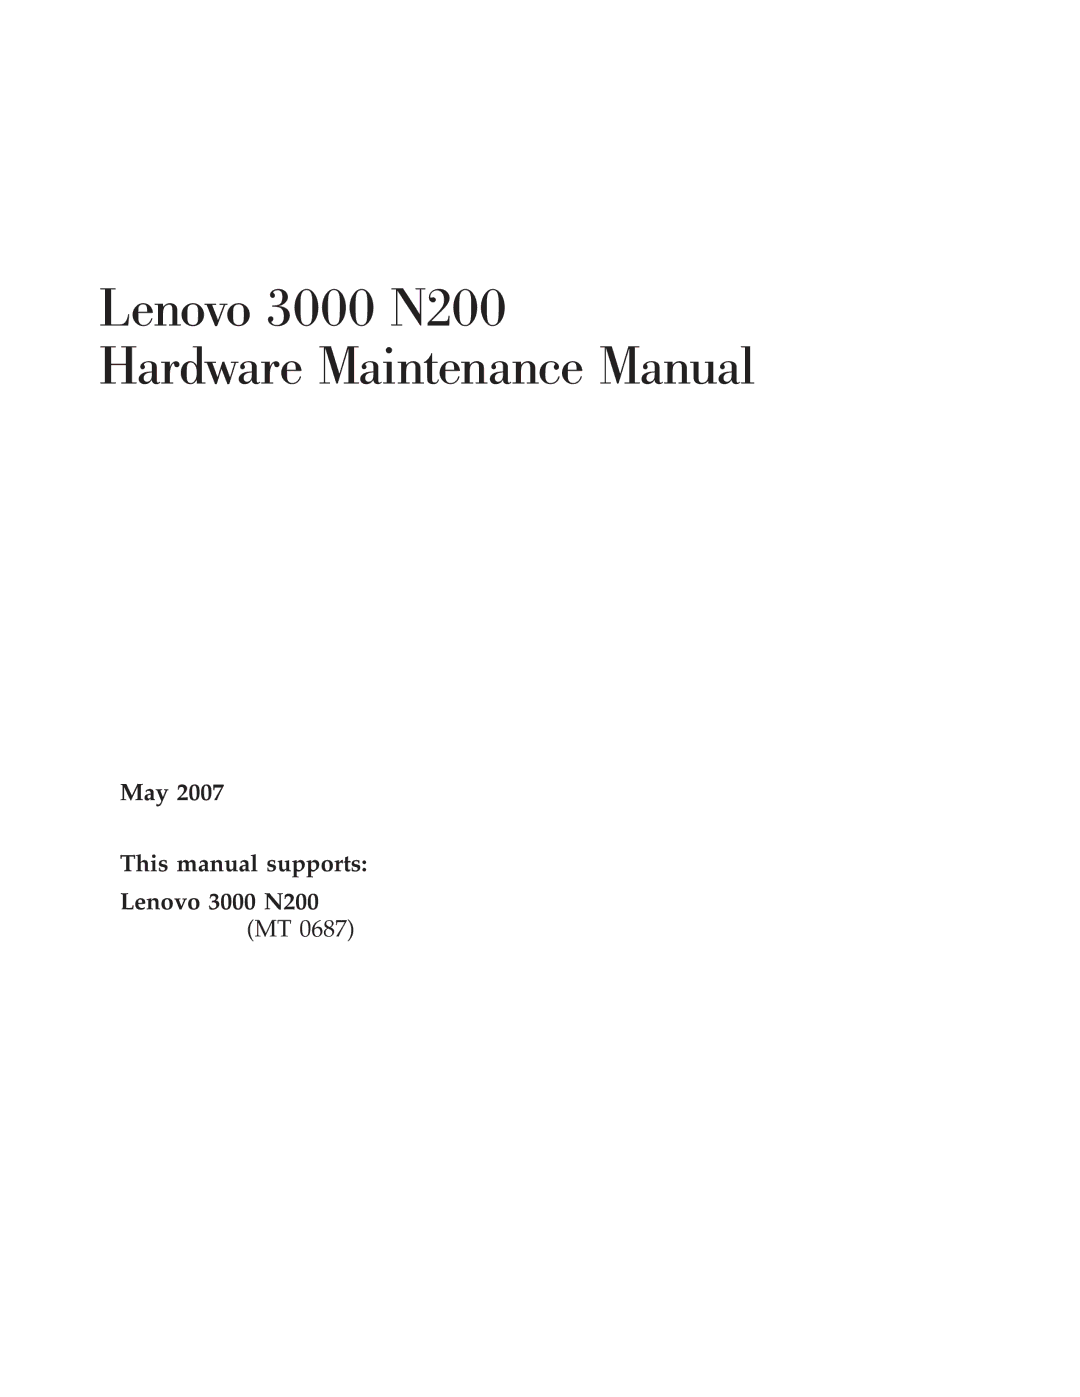 Lenovo manual Lenovo 3000 N200 Hardware Maintenance Manual 